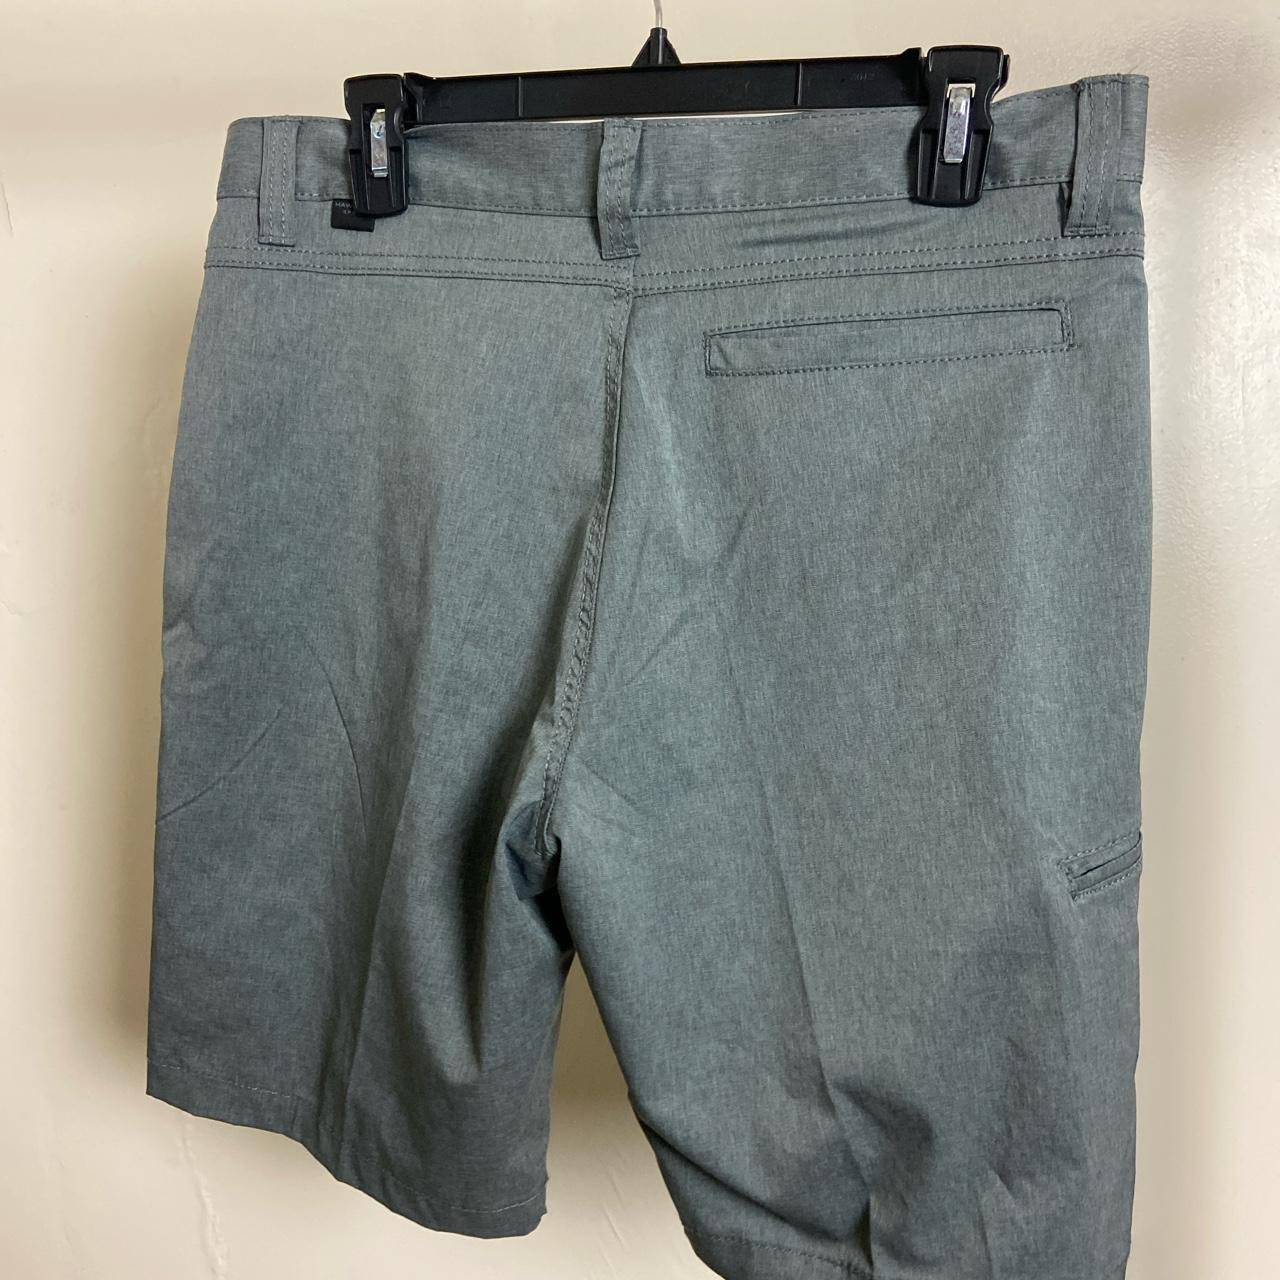 Hawke & Co. Men's Grey Shorts (4)